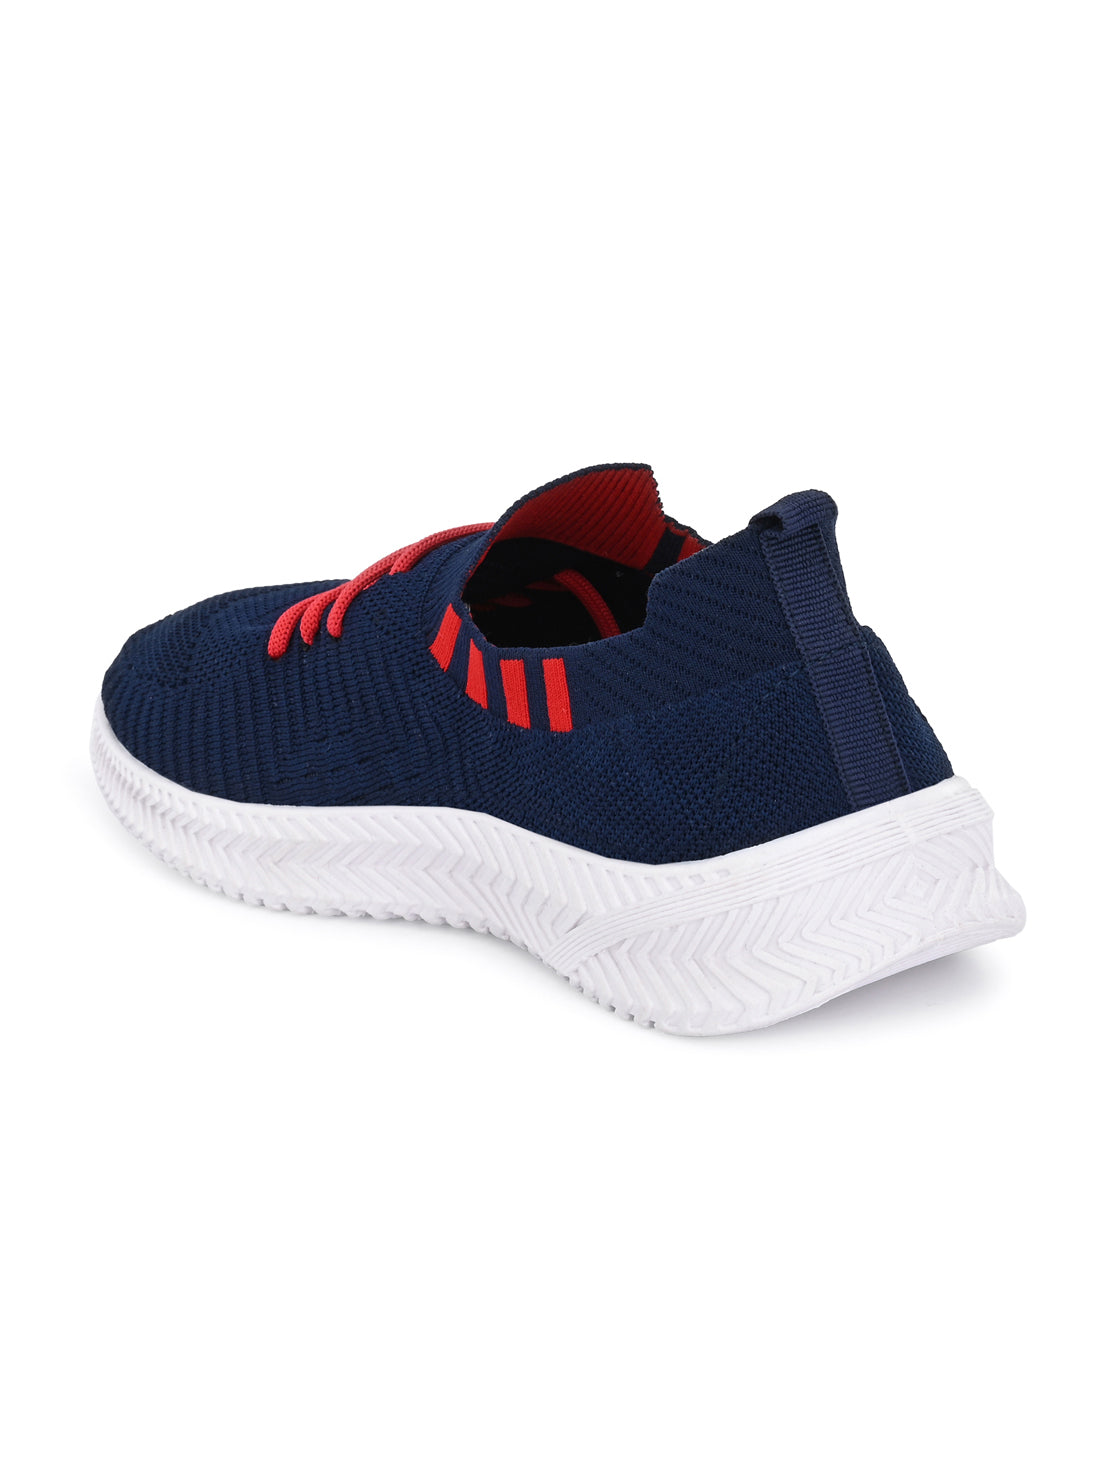 Hirolas® Men's Blue Knitted Running/Walking/Gym Lace Up Sneaker Sport Shoes (HRL2046BLU)